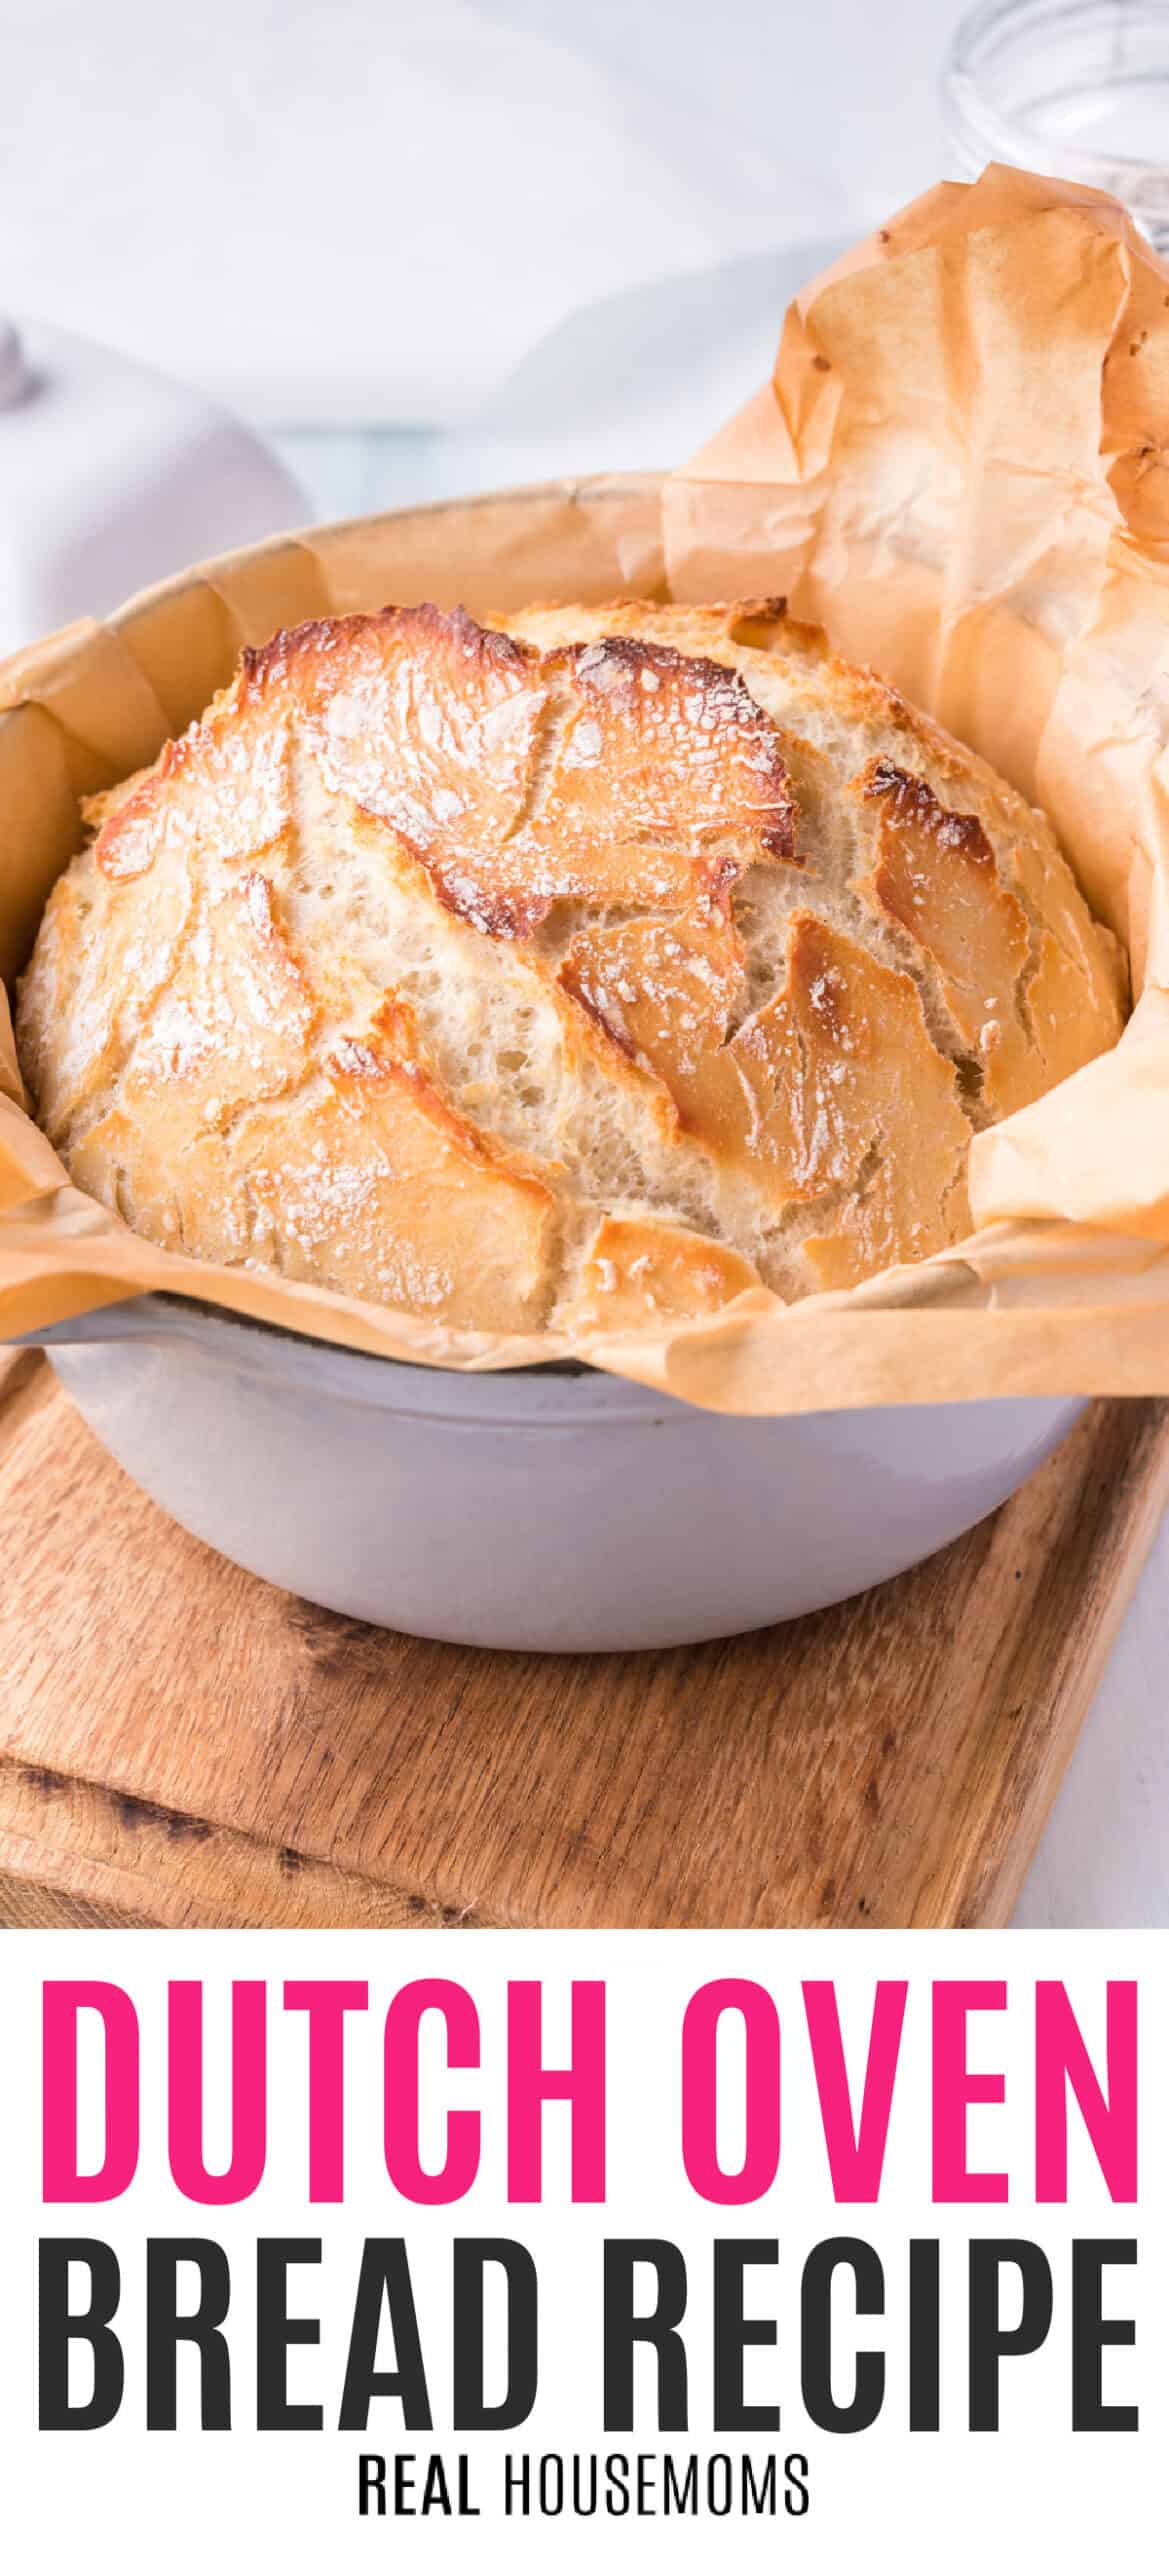 https://realhousemoms.com/wp-content/uploads/Dutch-Oven-Bread-HERO-scaled.jpg